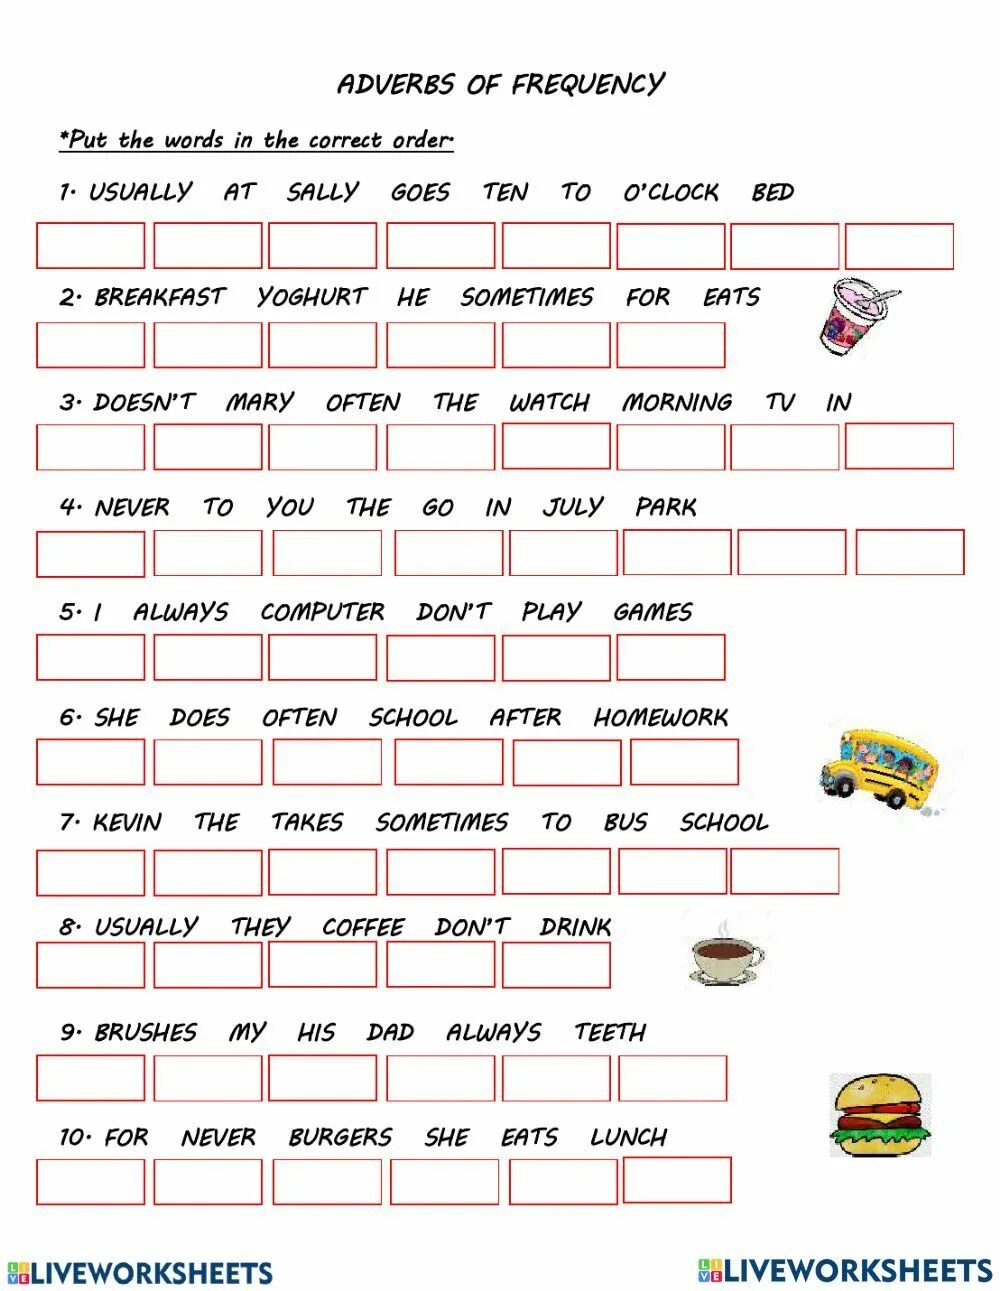 Adverbs word order. Наречия частотности Worksheets. Adverbs of Frequency Worksheets for Kids игра. Наречия частотности в английском языке Worksheets. Word order в английском языке.